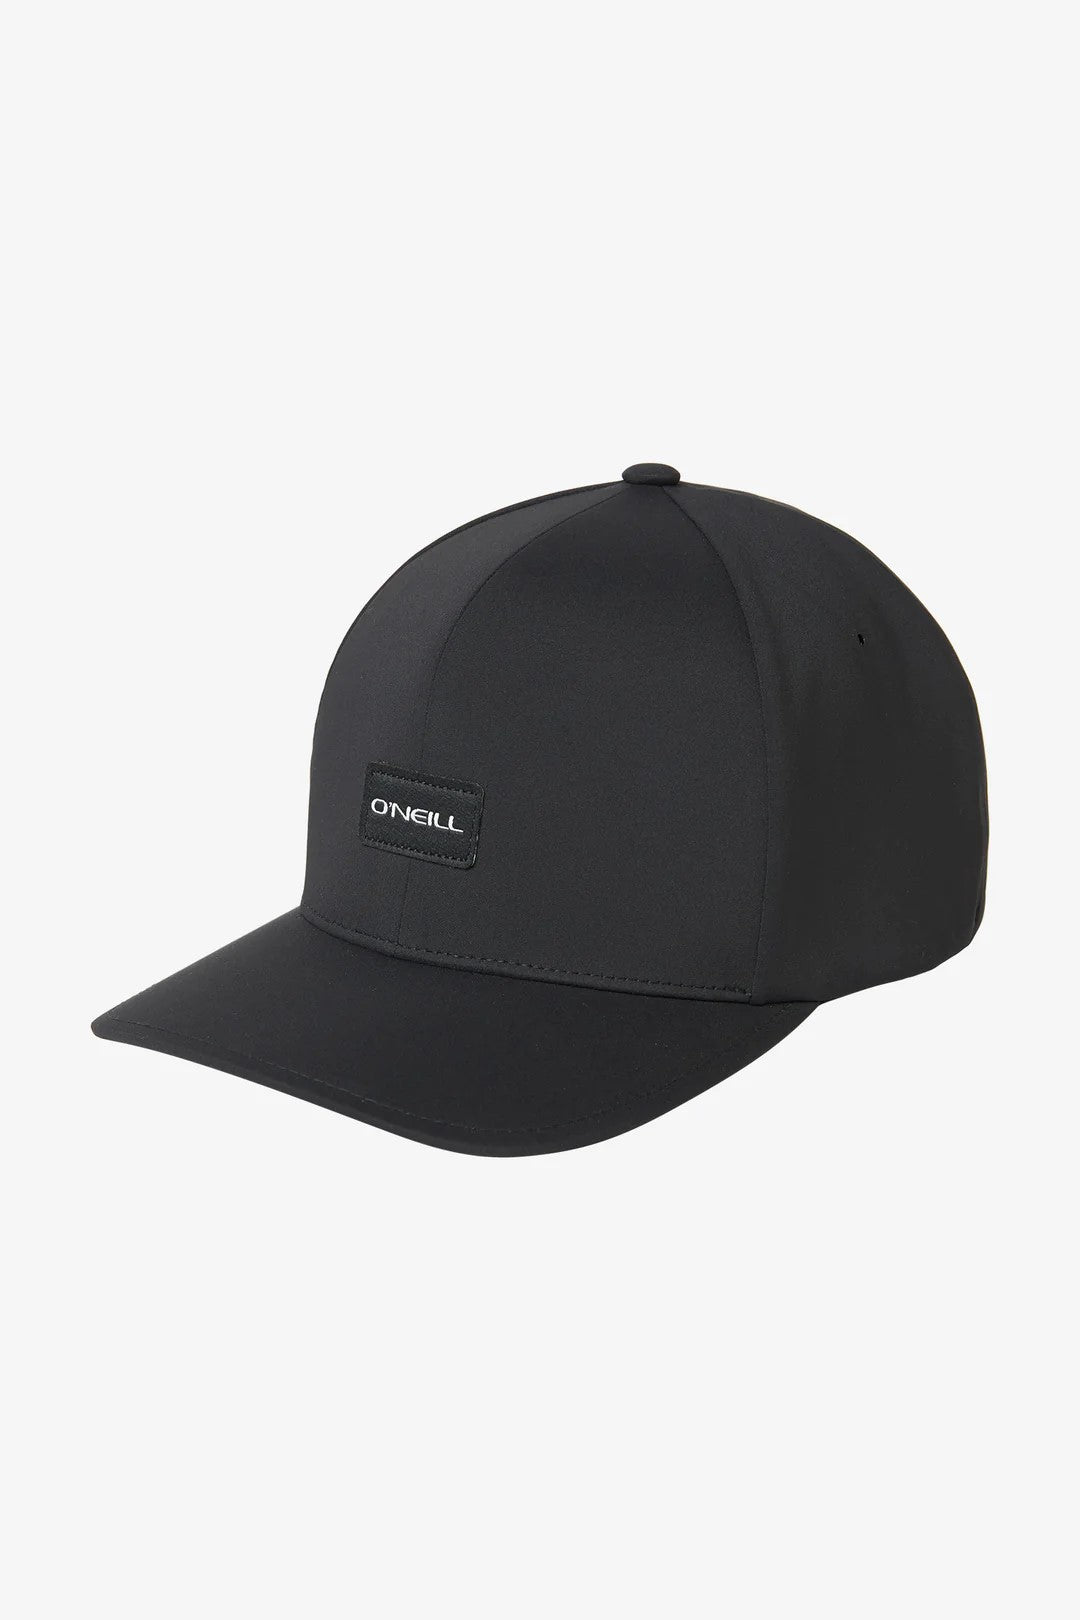 O'Neill: Hybrid Stretch Hat